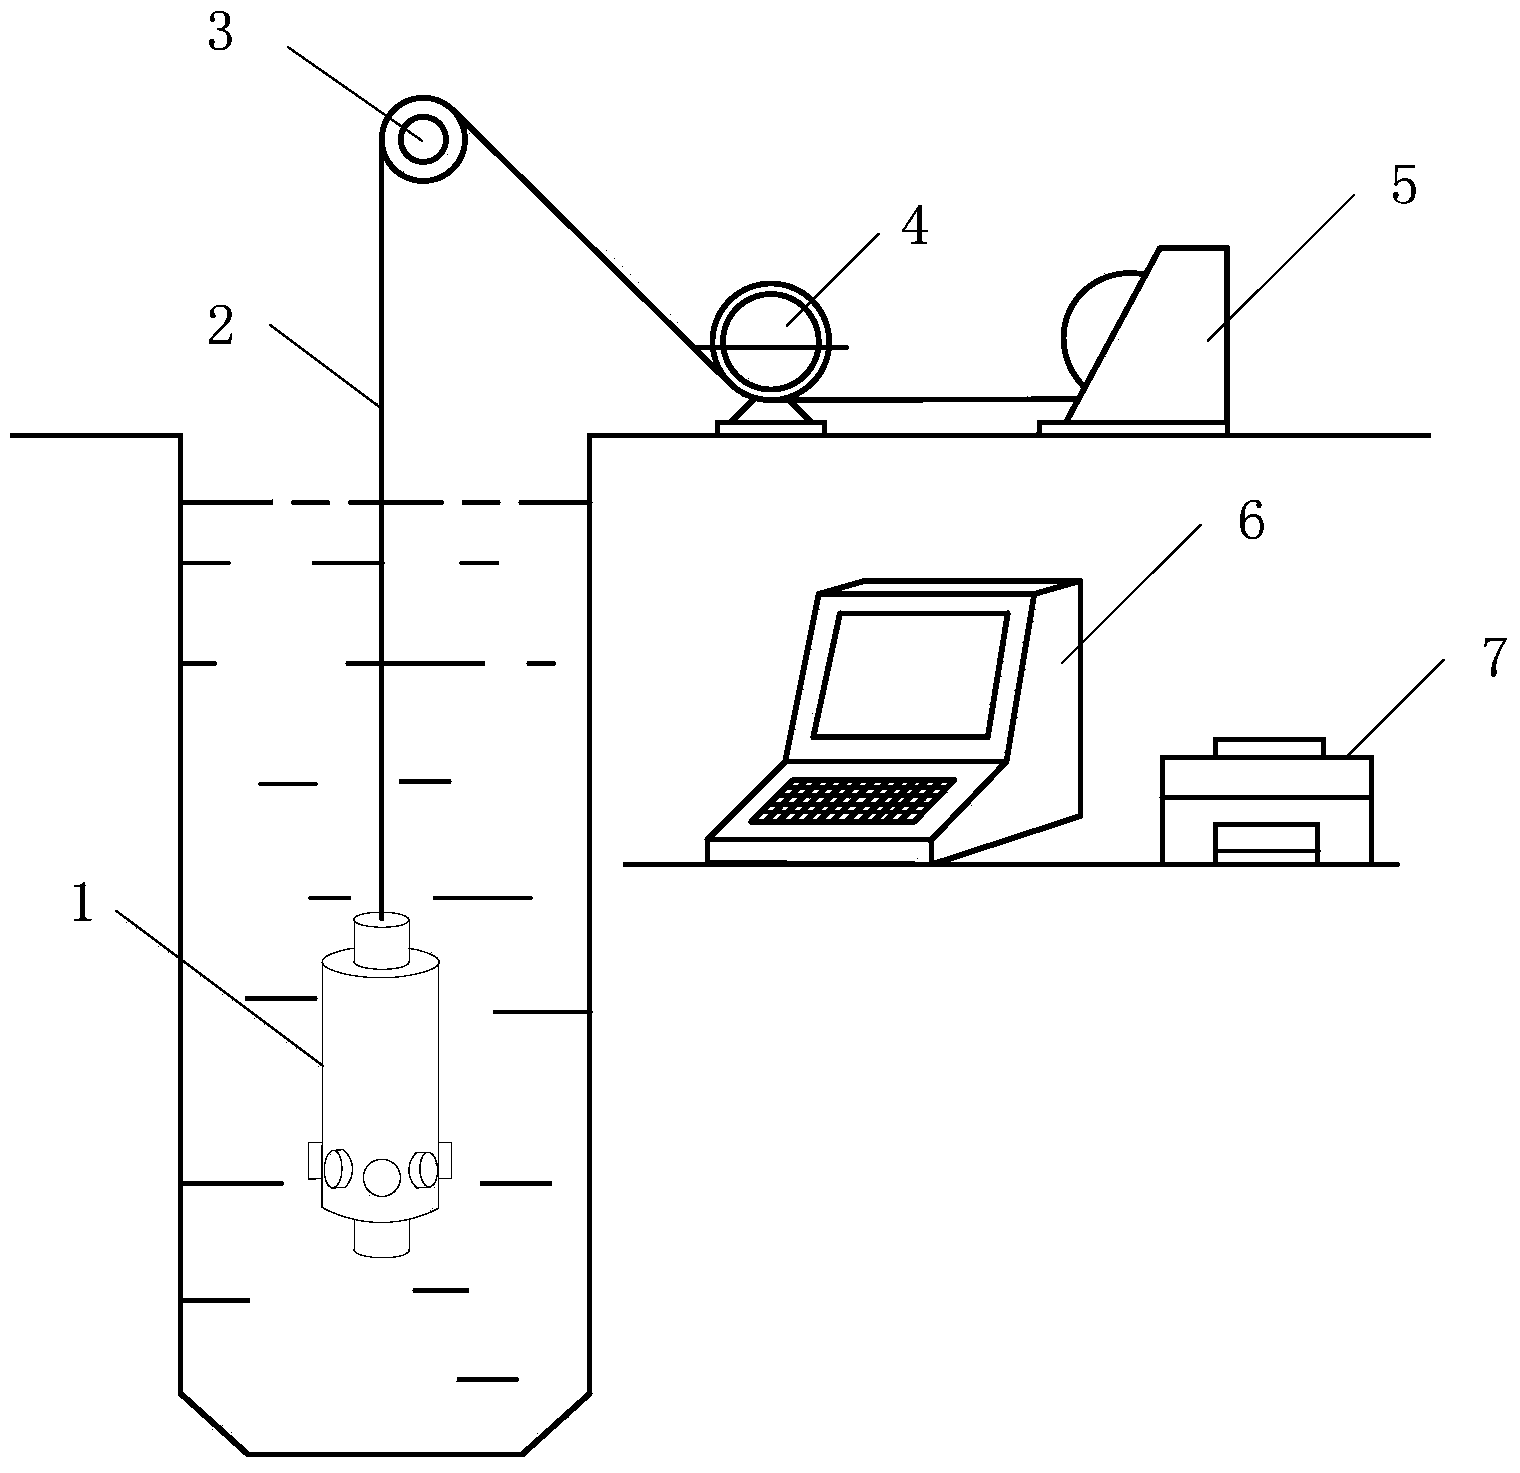 Logging method of ultrasonic logger system